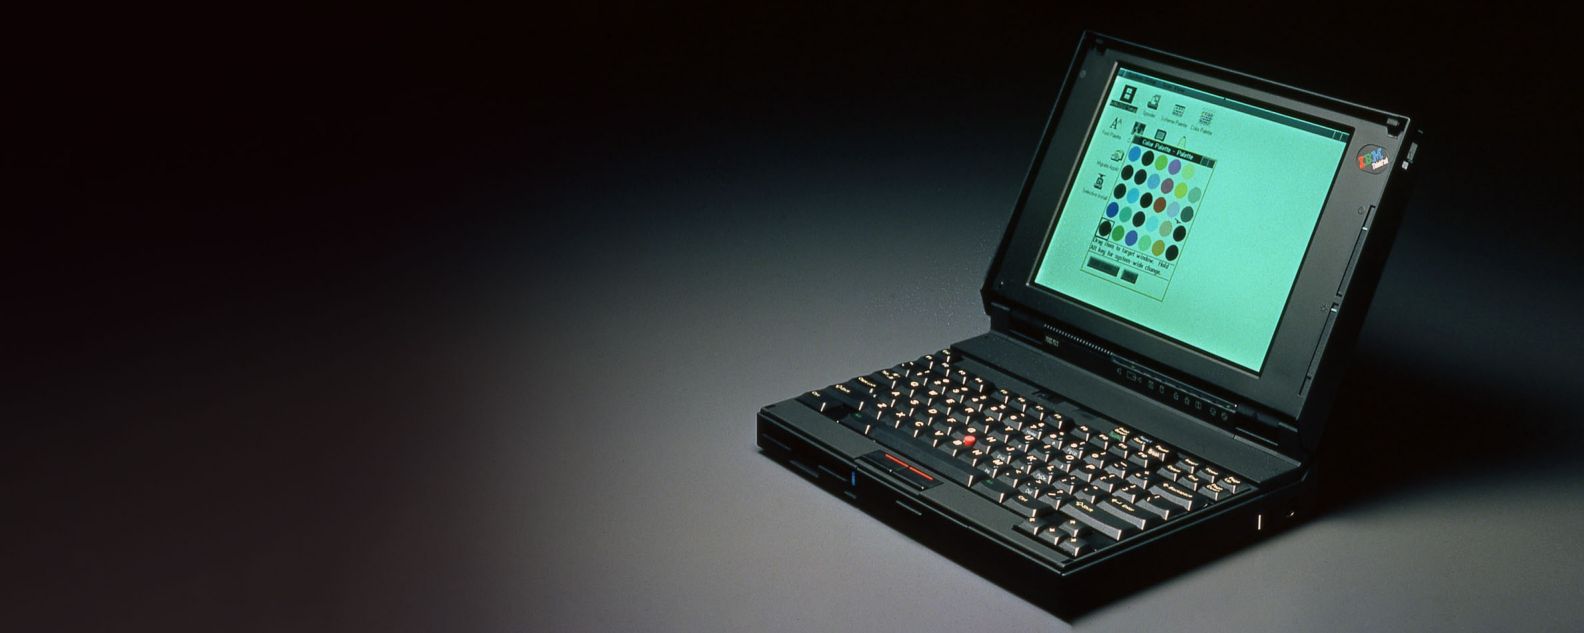 ThinkPad 700C (256-color screen) 1992